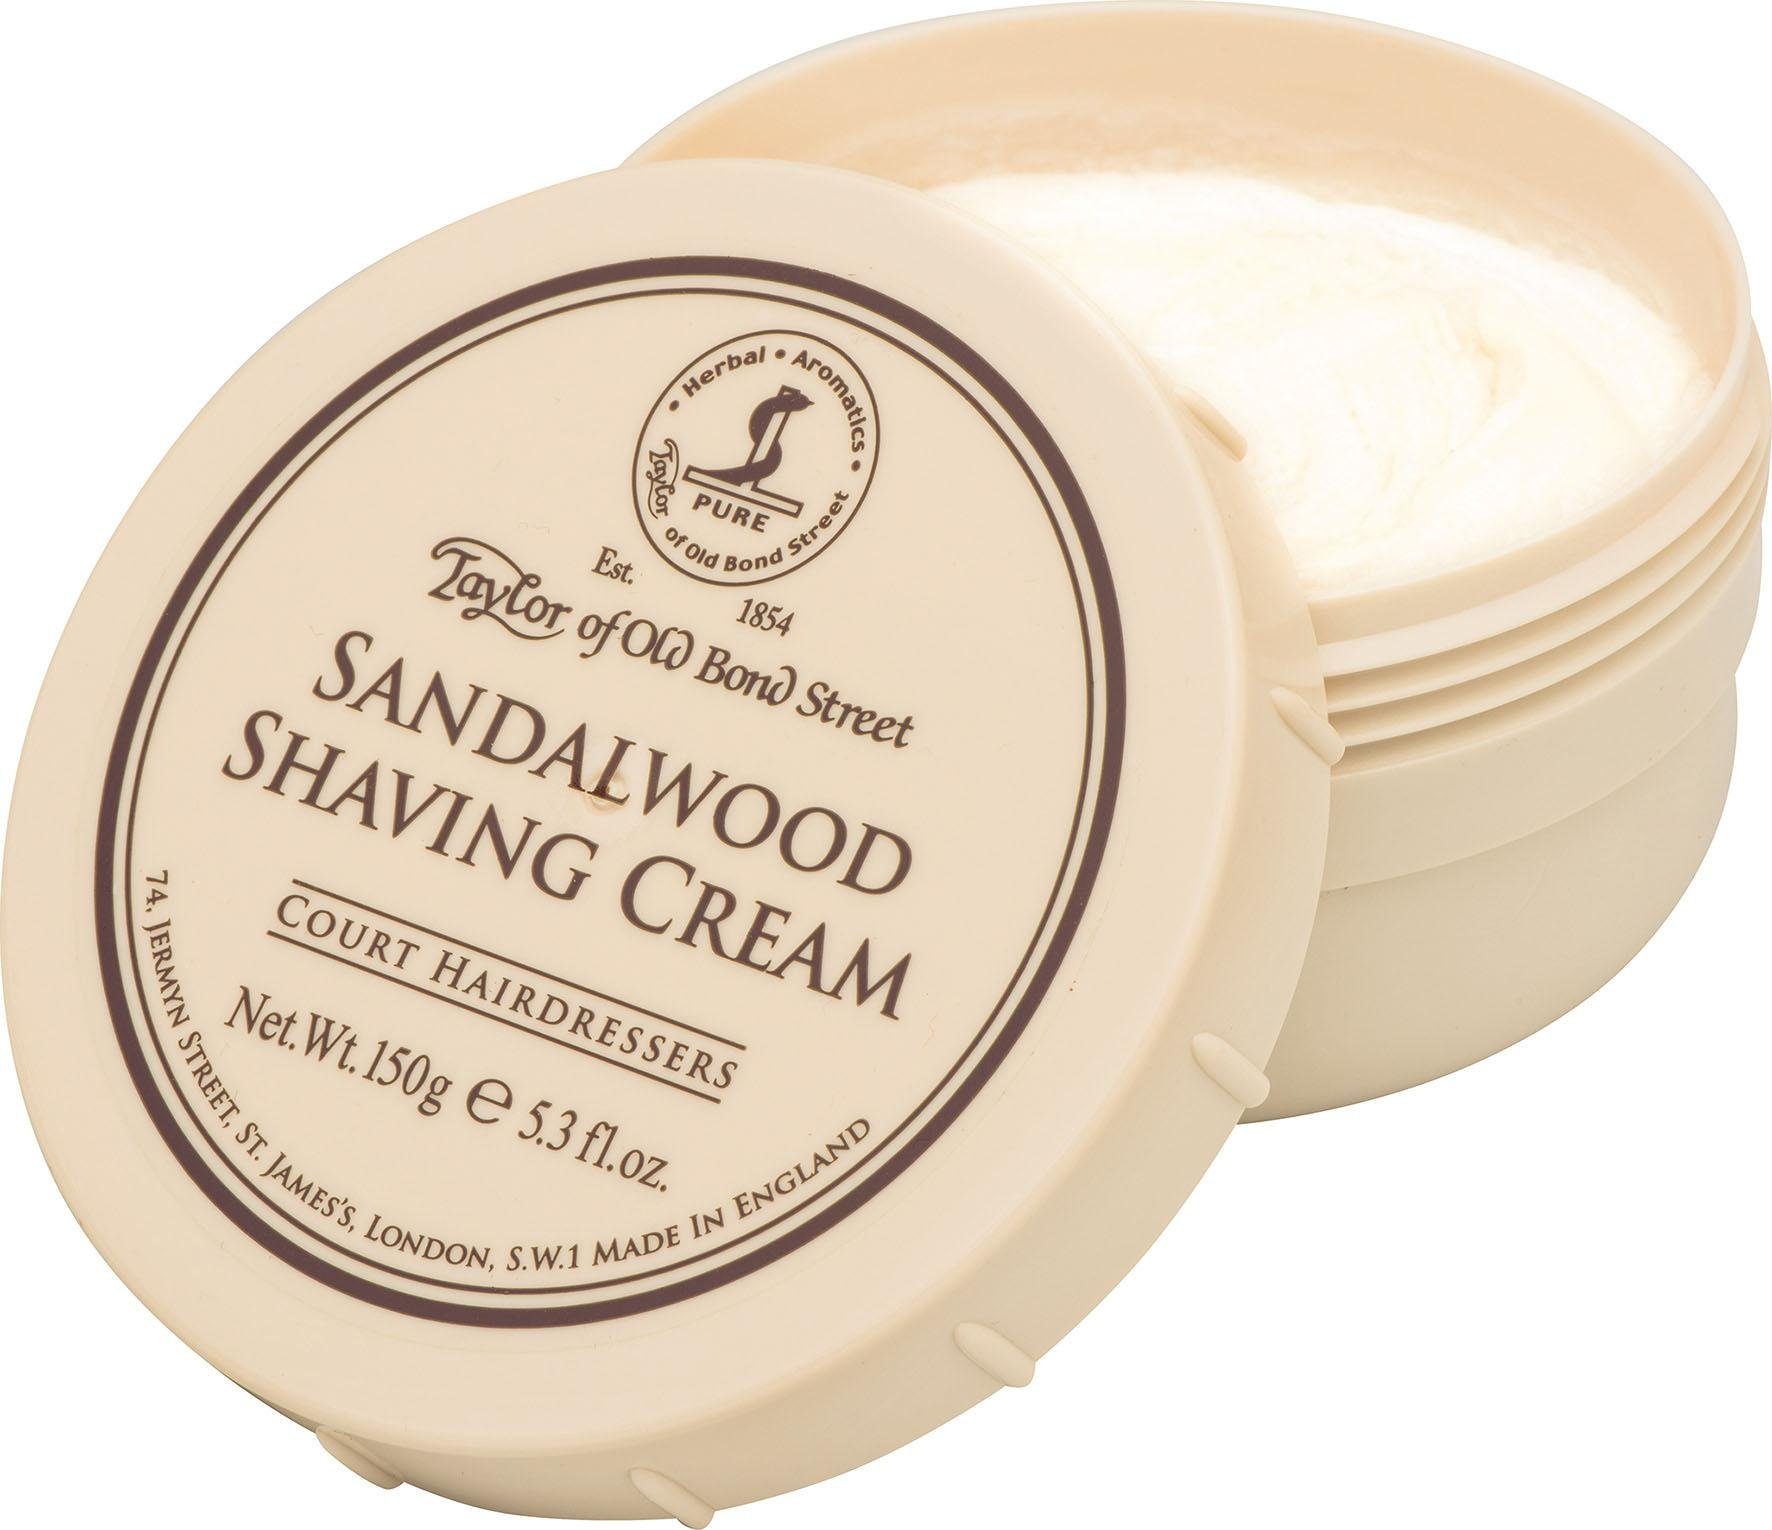 of Rasiercreme Shaving Bond Old Taylor Street Sandalwood Cream